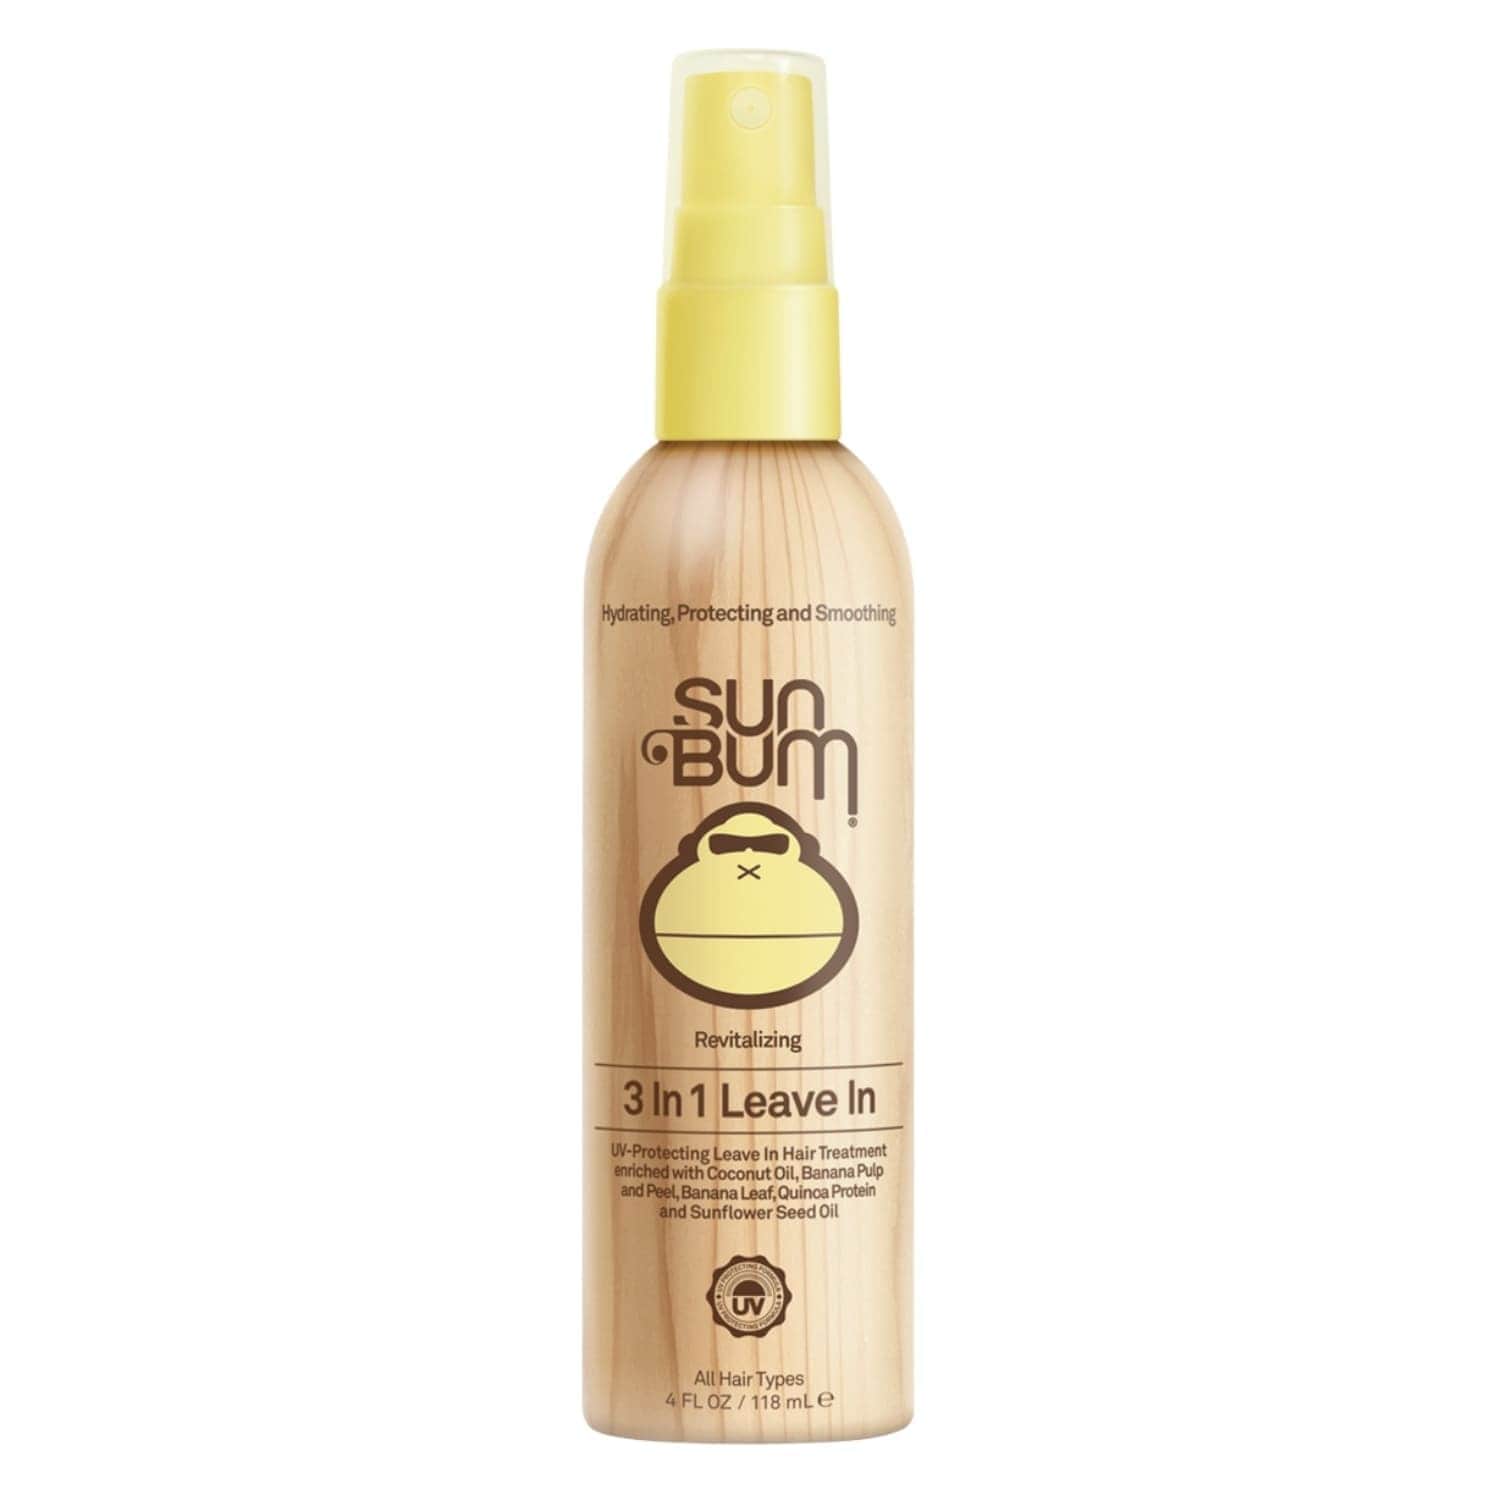 Sun Bum 3 In 1 Leave In Conditioner 118ml - Hair Shampoo/Conditioner by Sun Bum 118ml